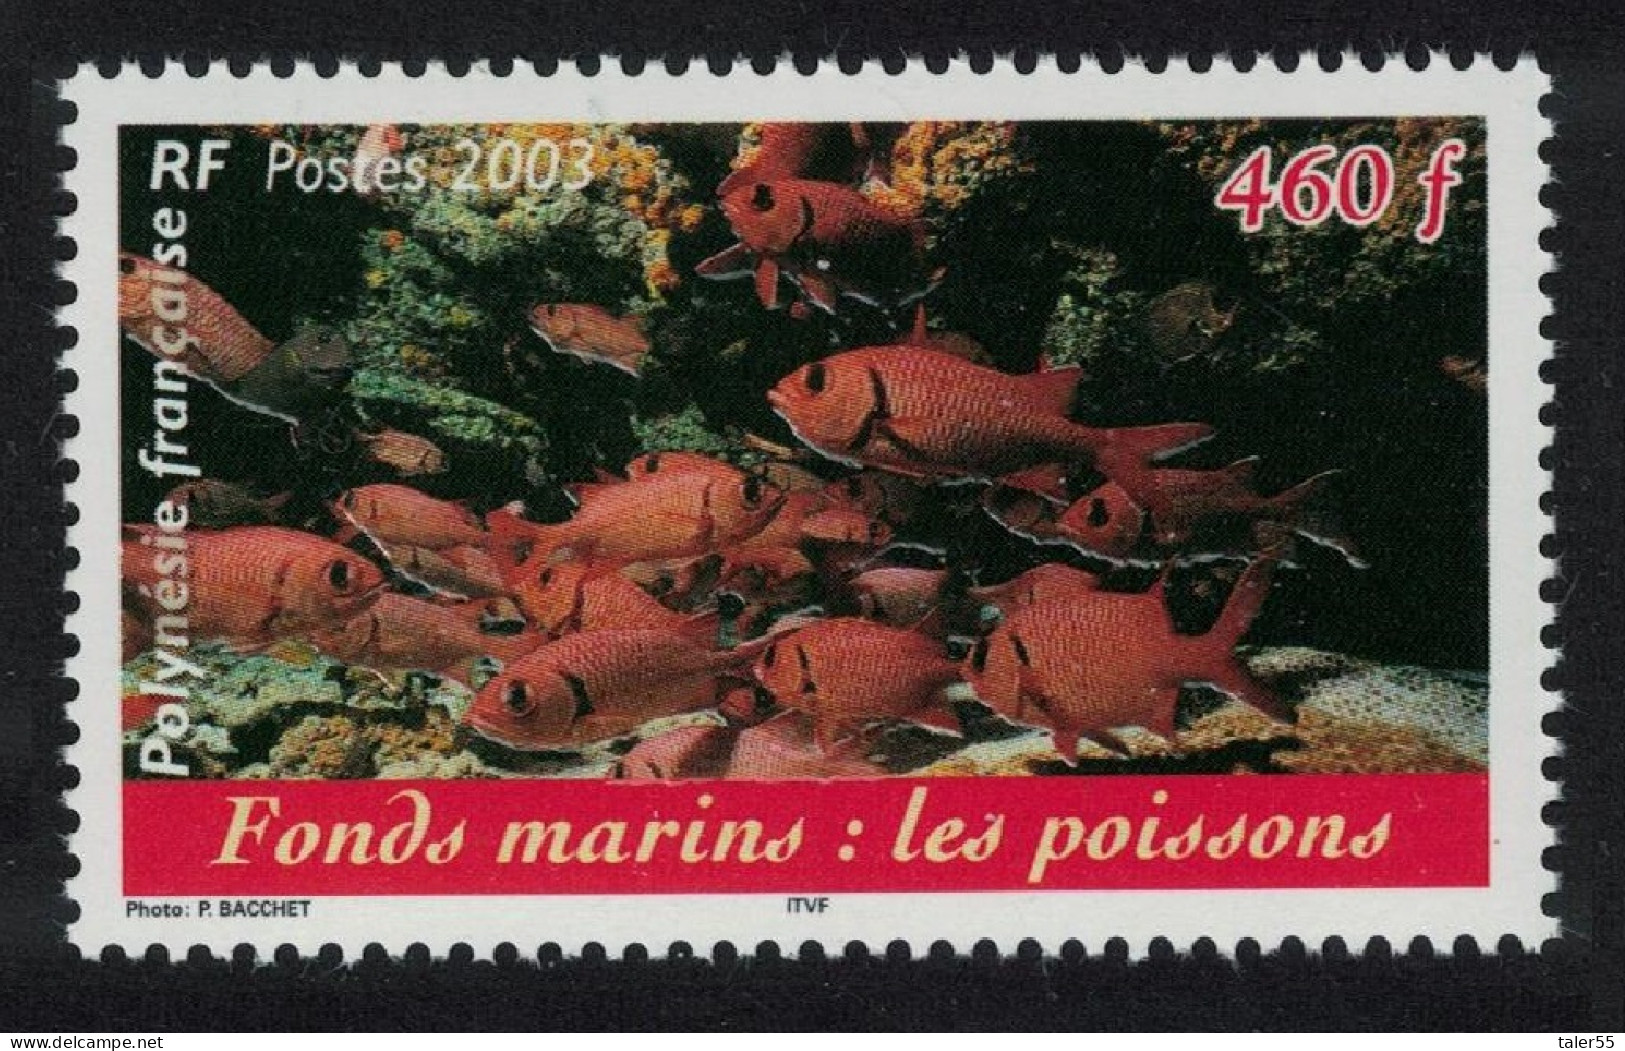 Fr. Polynesia Fish Polynesian Marine Life 2003 MNH SG#957 - Ungebraucht